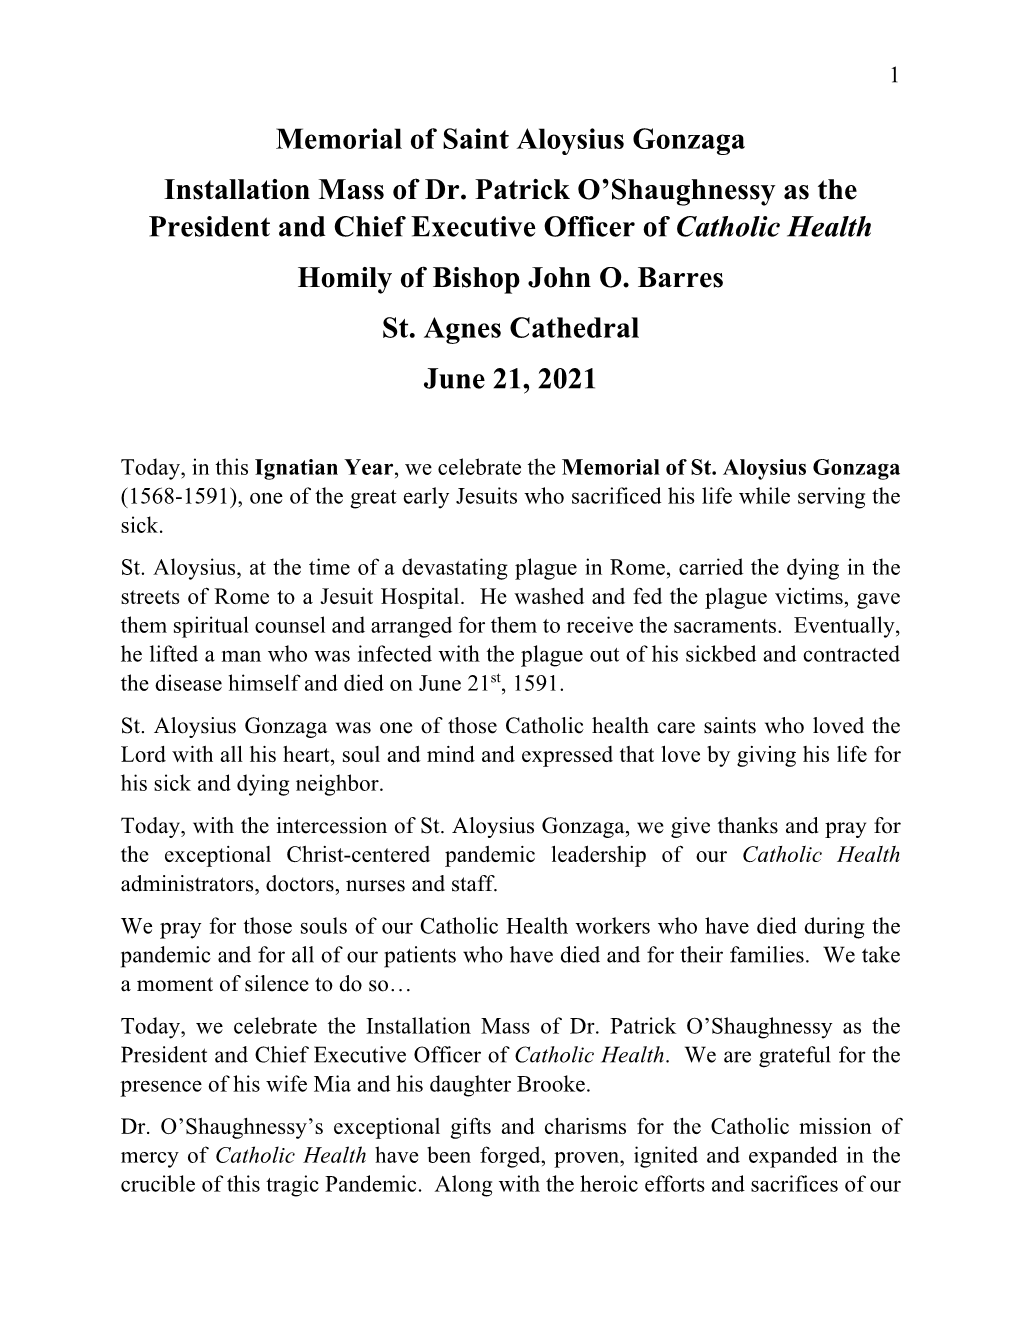 Memorial of Saint Aloysius Gonzaga Installation Mass of Dr. Patrick O